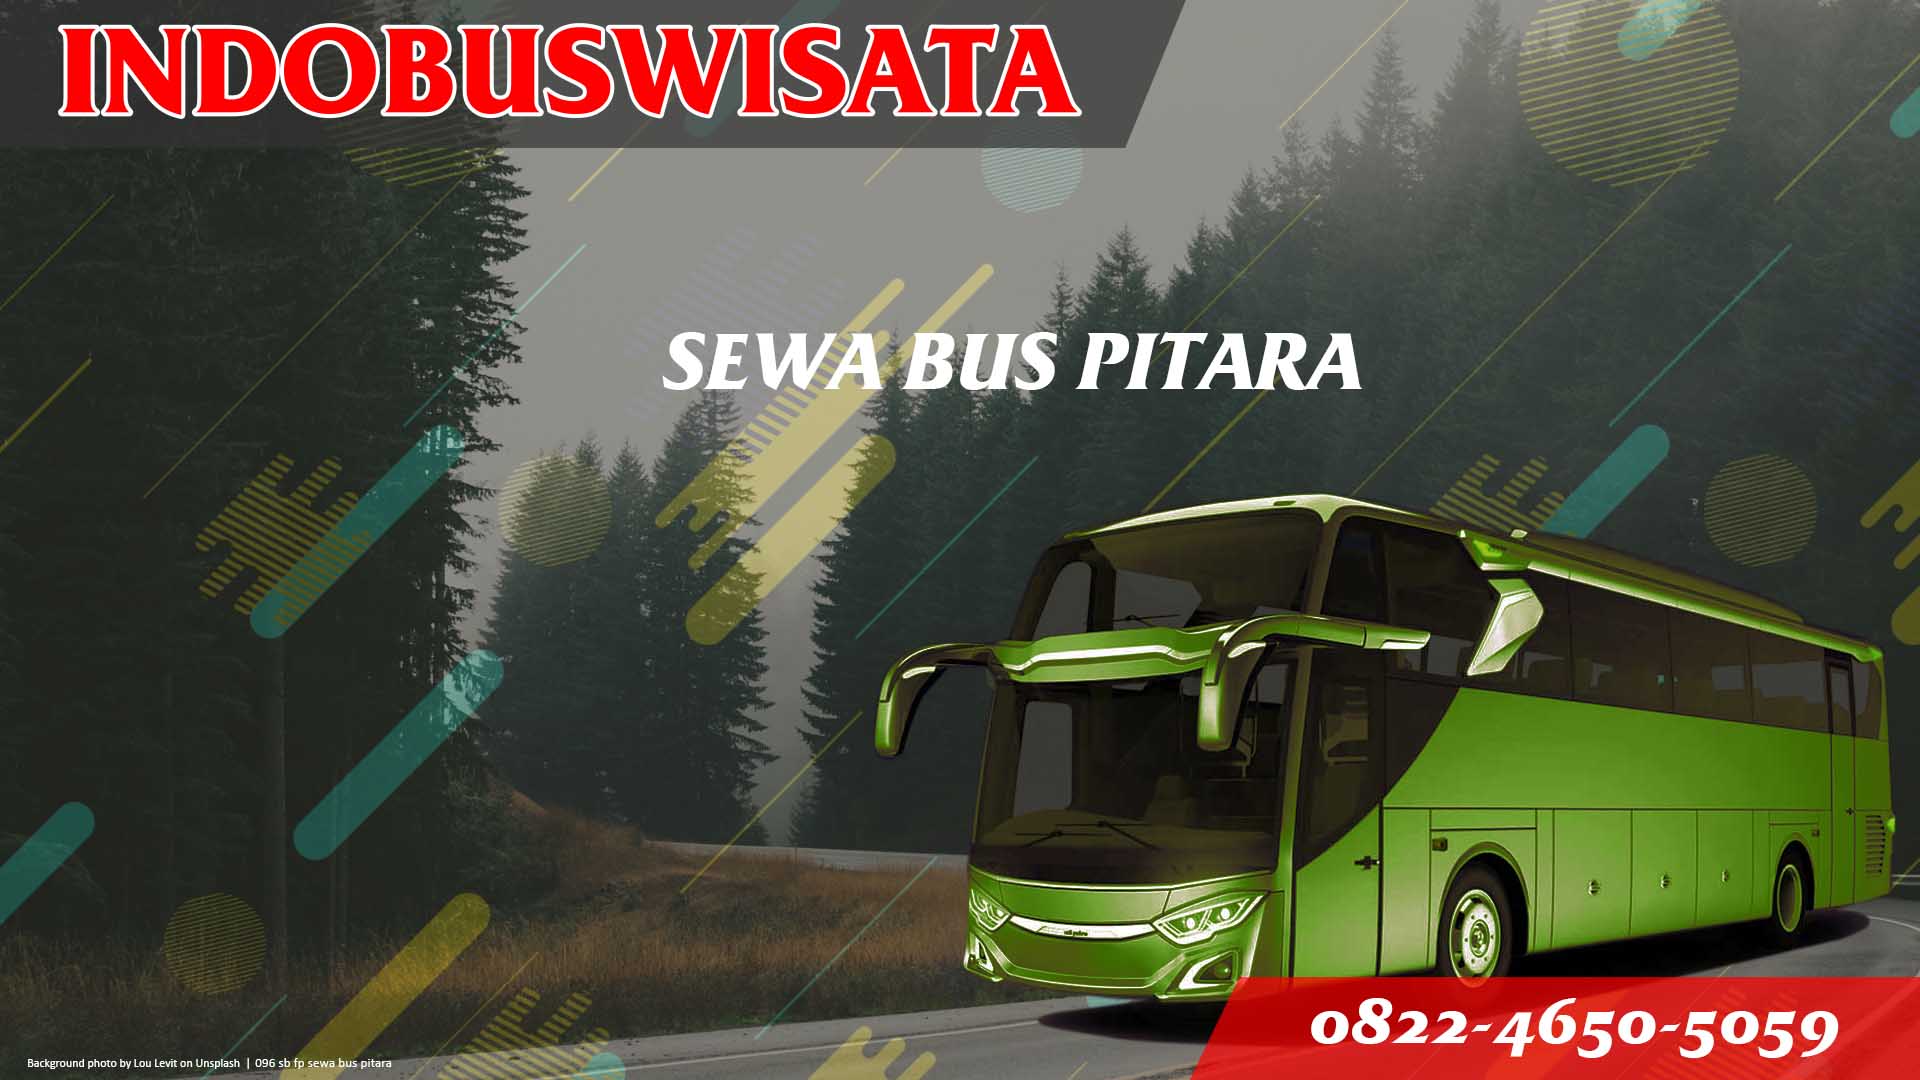 096 Sb Fp Sewa Bus Pitara Jb 3 Hdd Indobuswisata